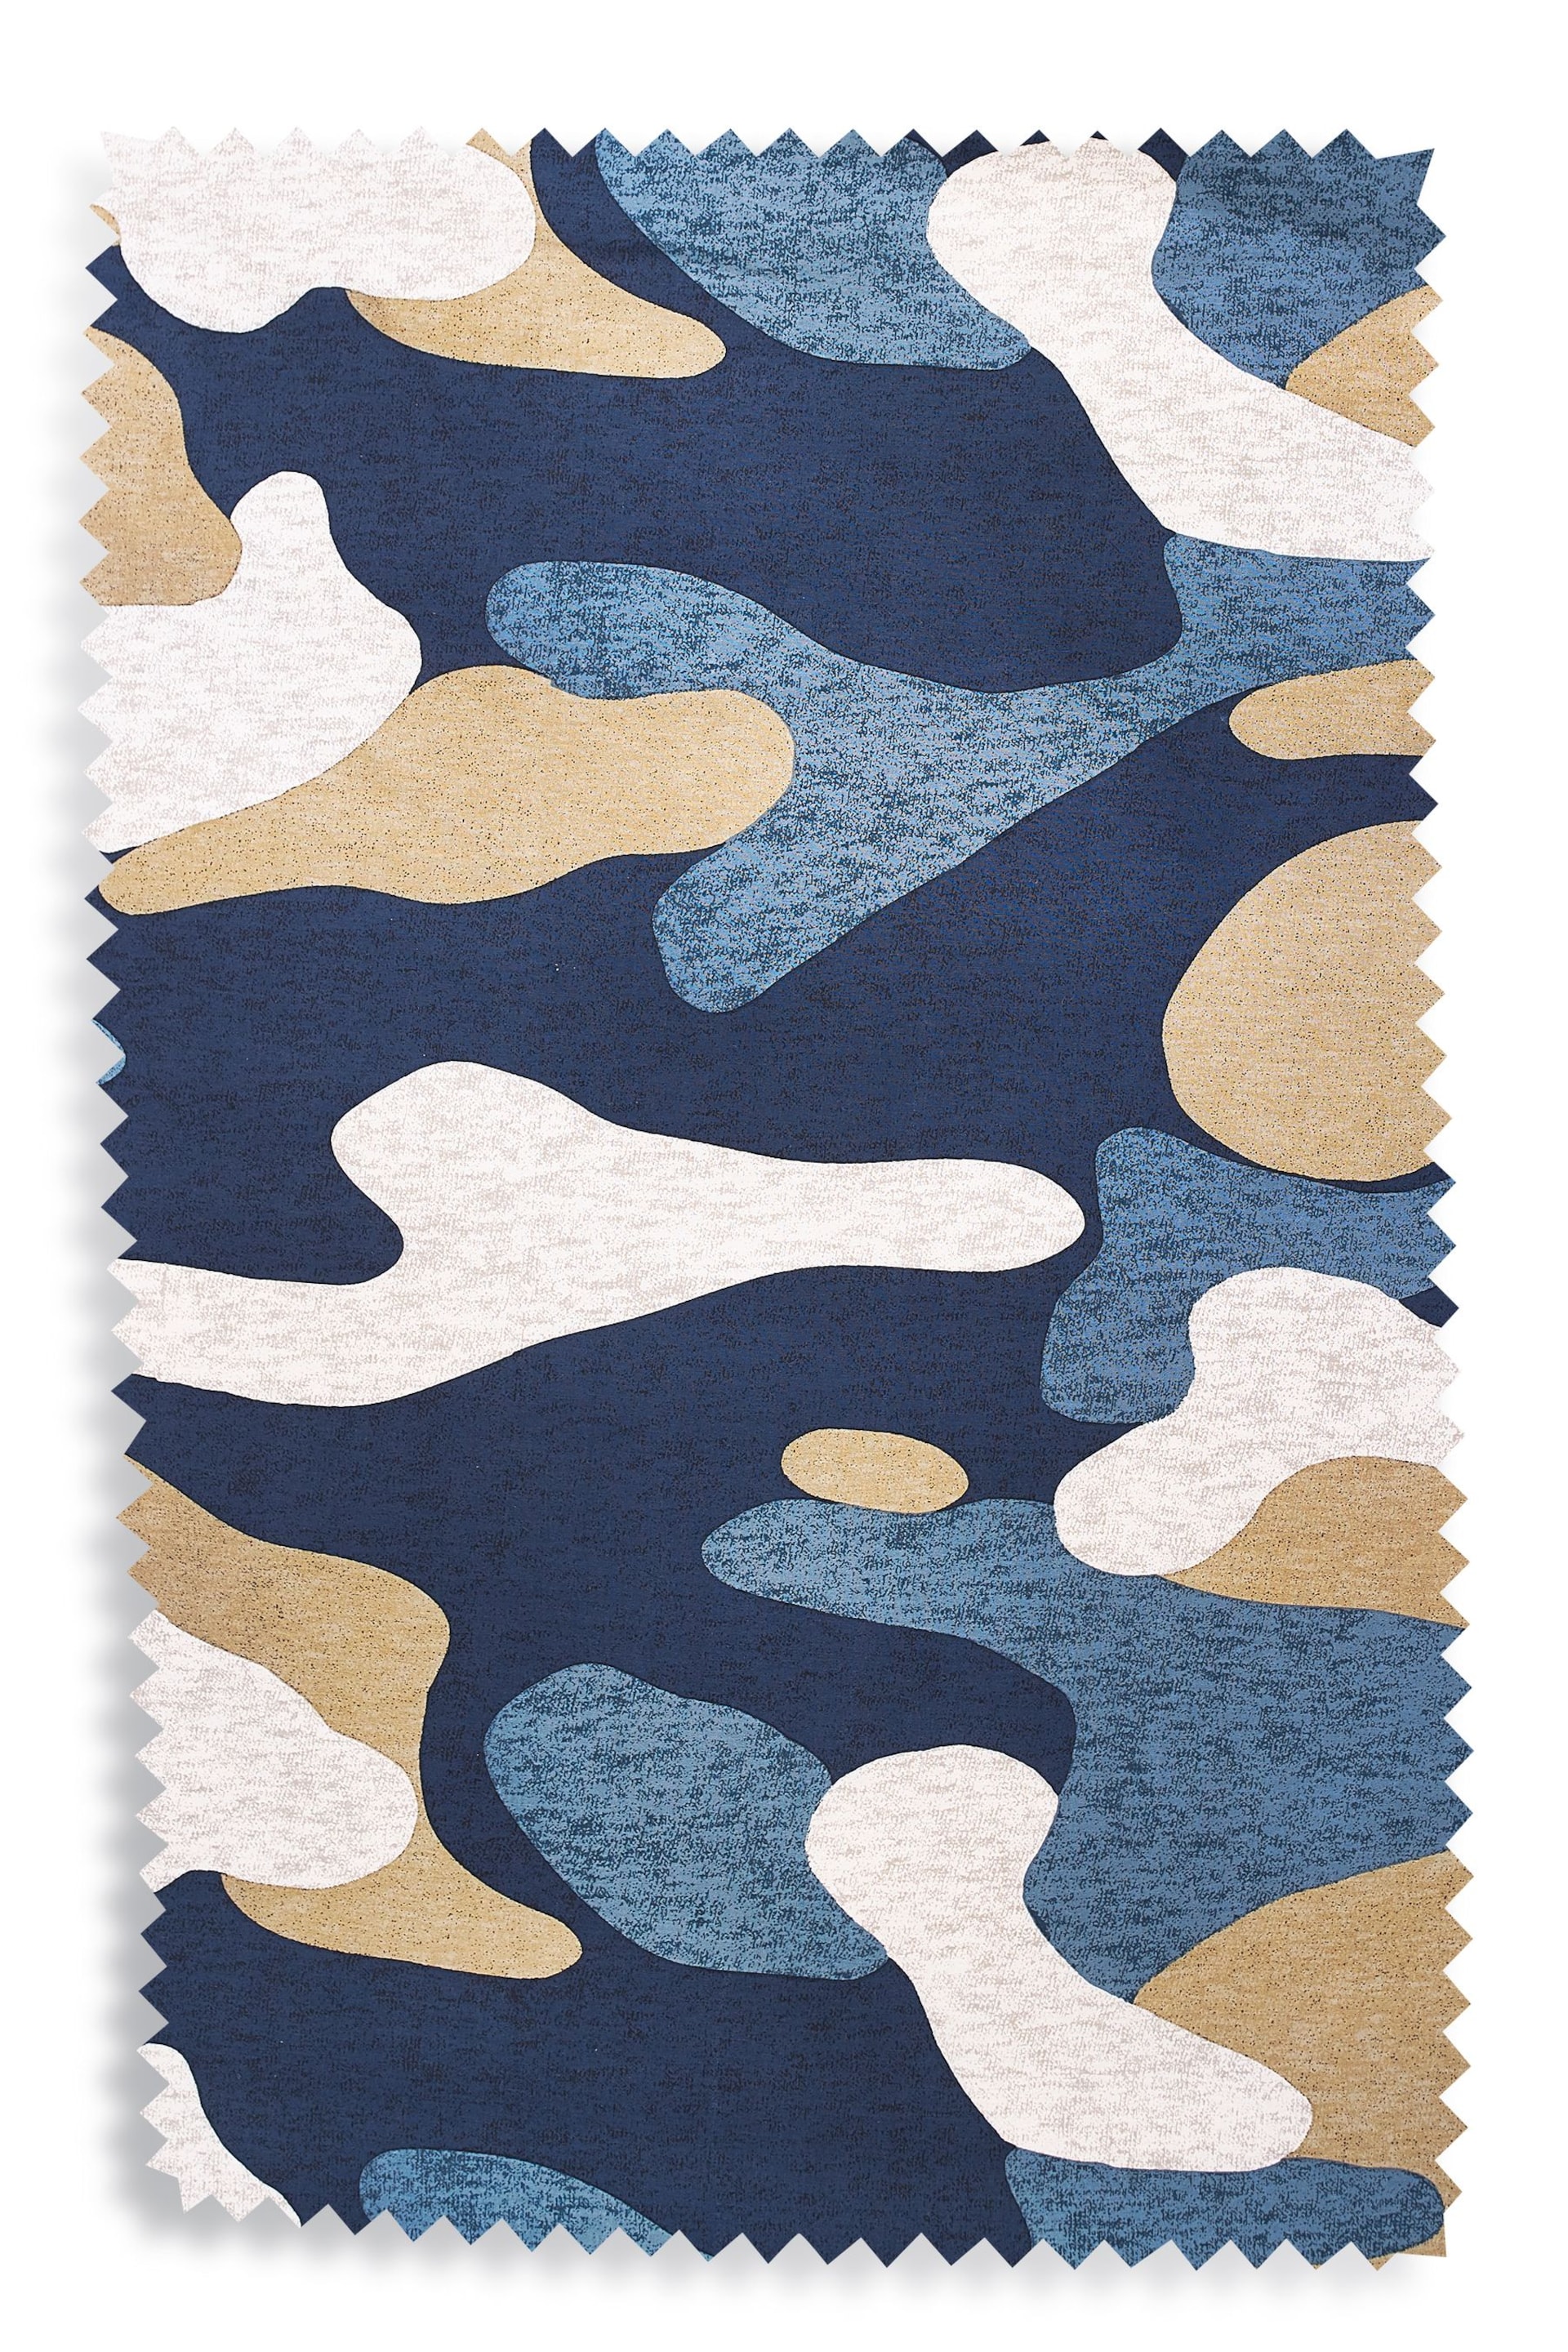 Blue Camo Duvet Cover and Pillowcase Set - Image 6 of 6